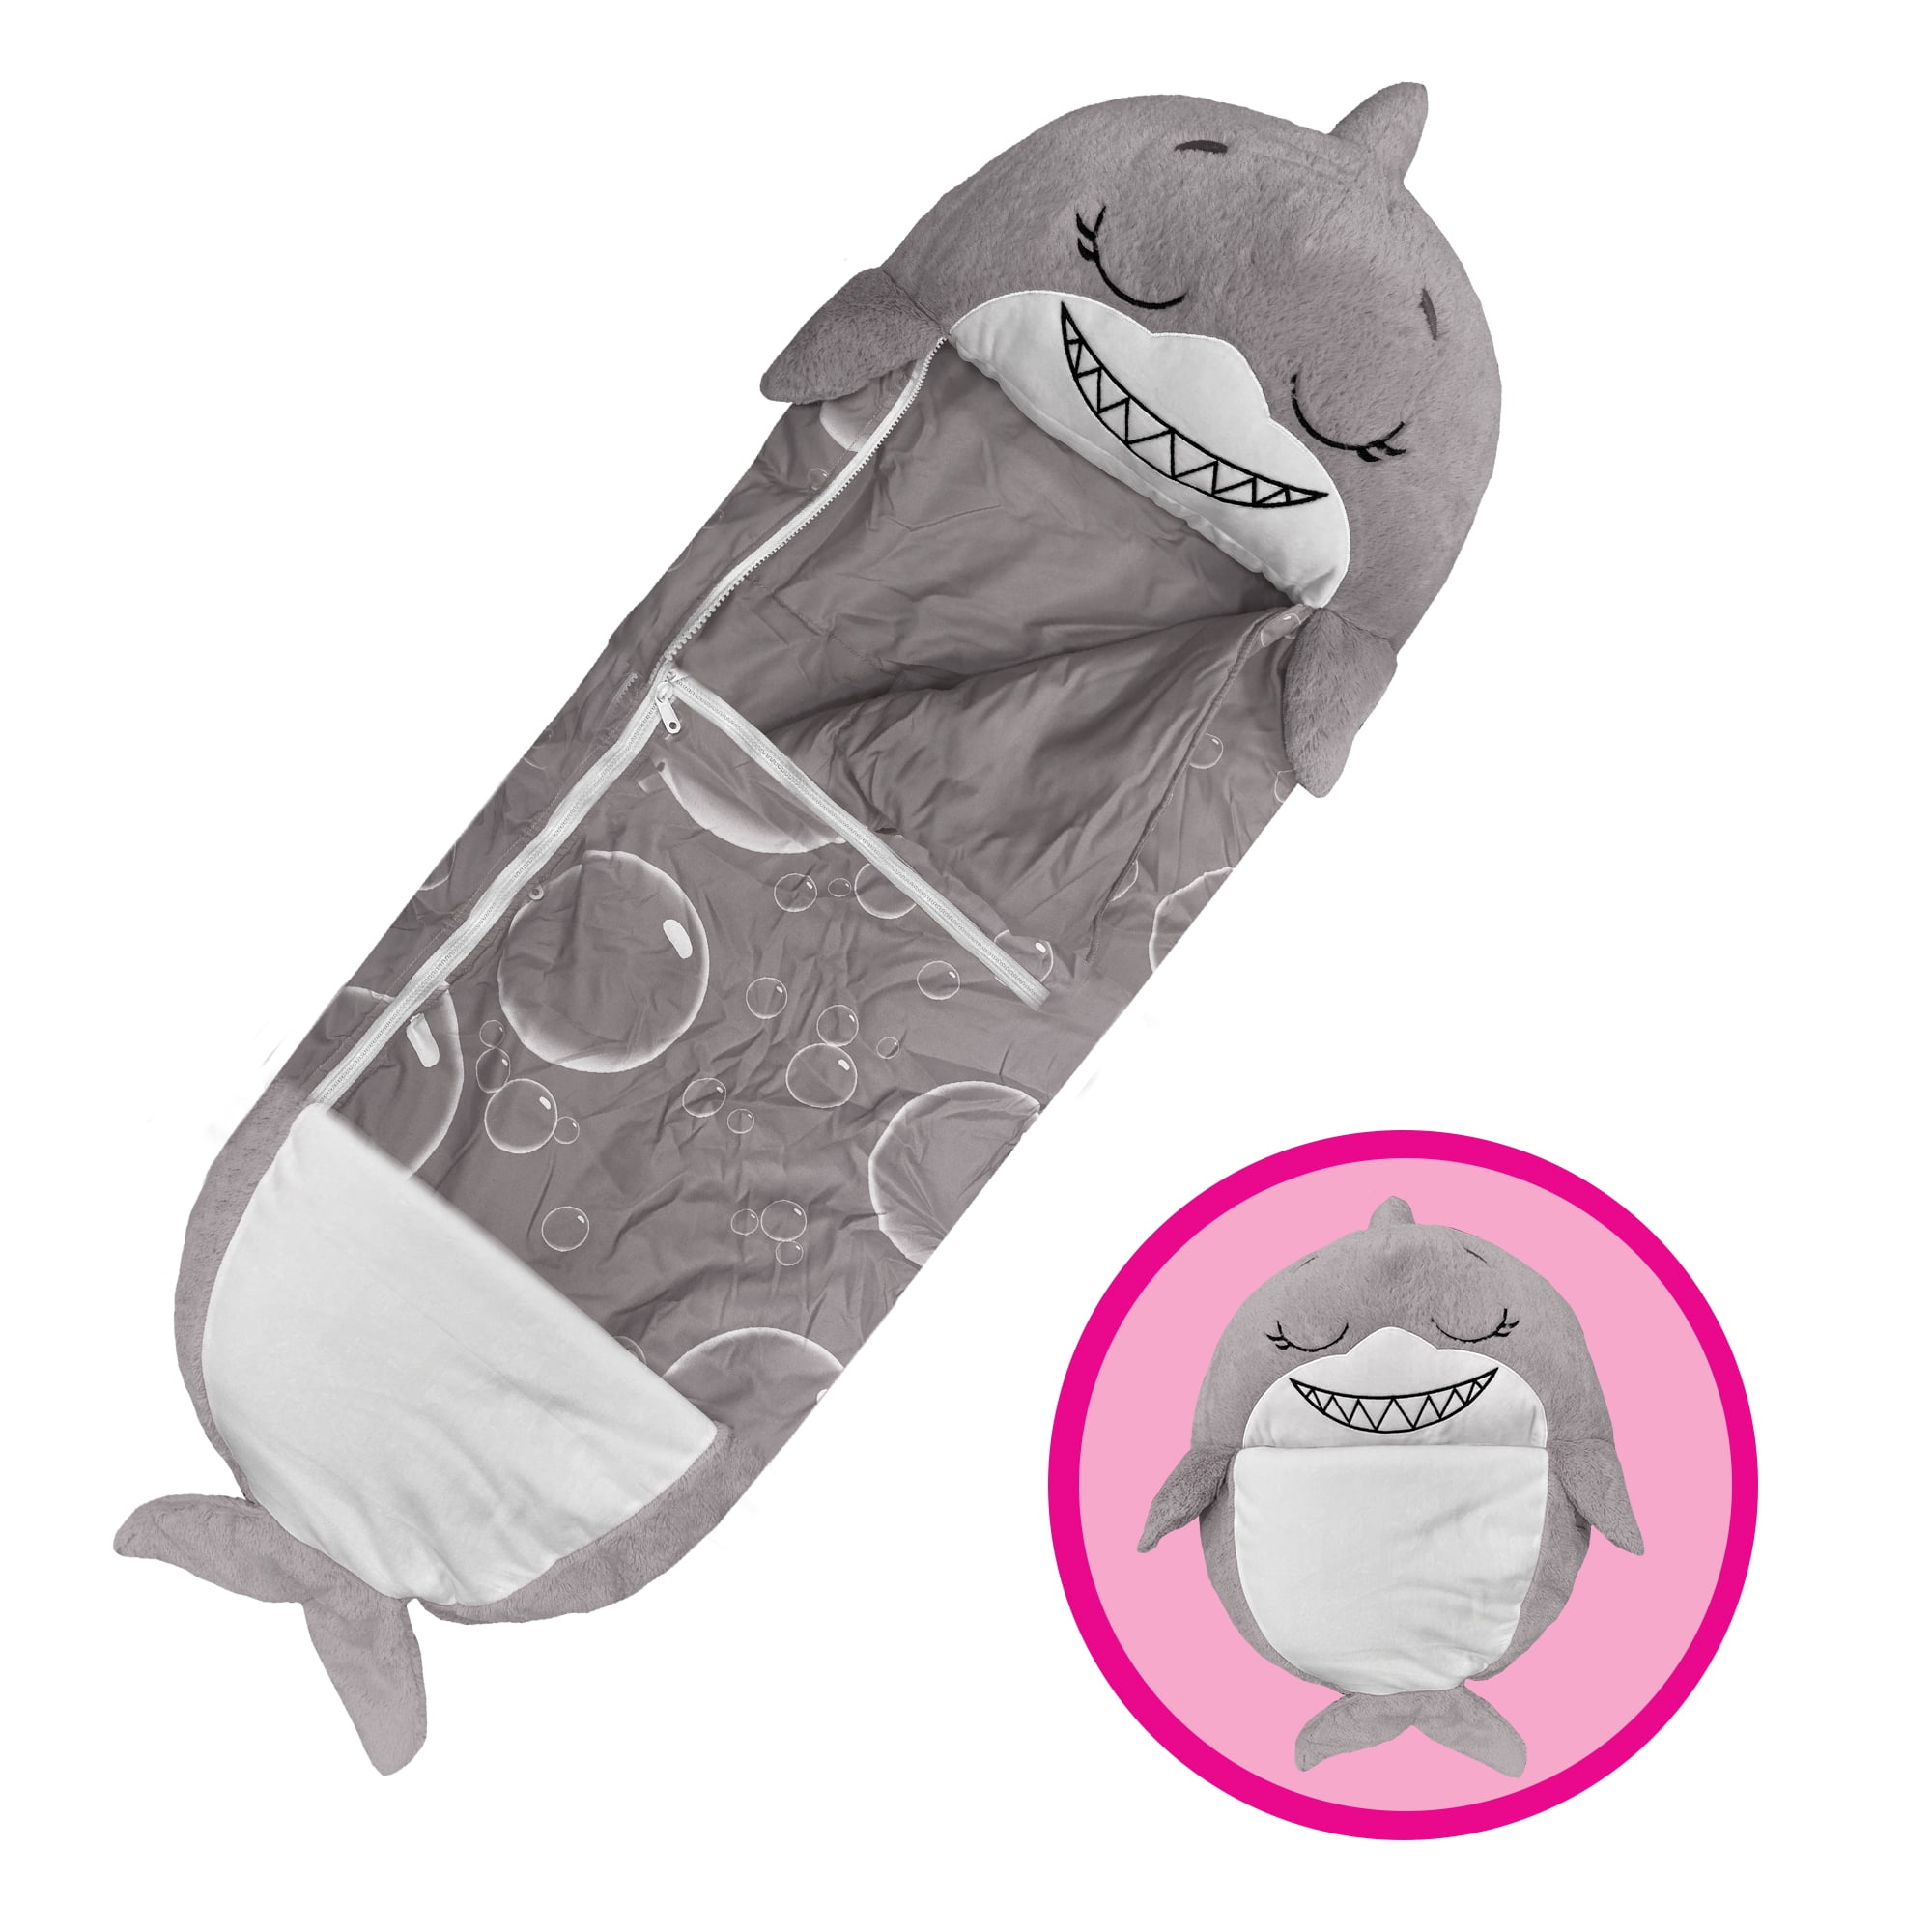 Happy Nappers 2-in-1 Toddler's Sleeping Sack Play Pillow Stuffed Animal, Medium, Shark